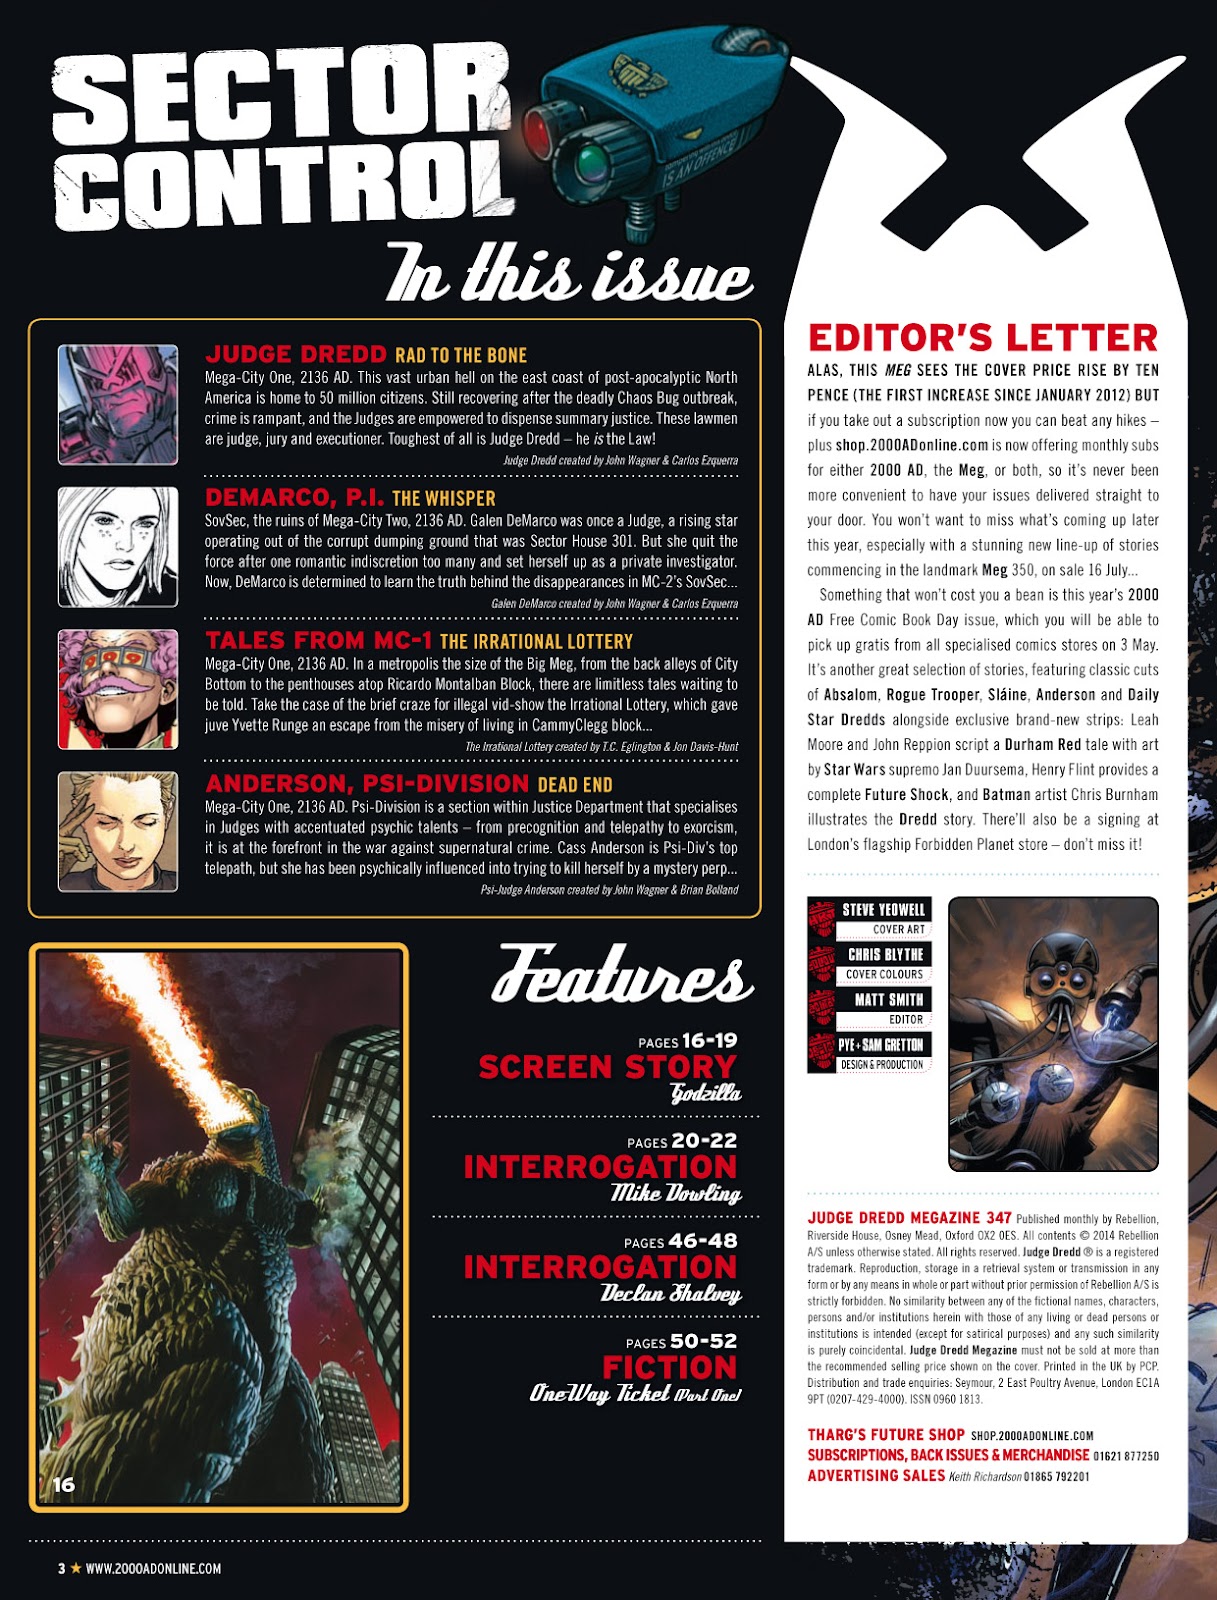 Judge Dredd Megazine (Vol. 5) issue 347 - Page 3